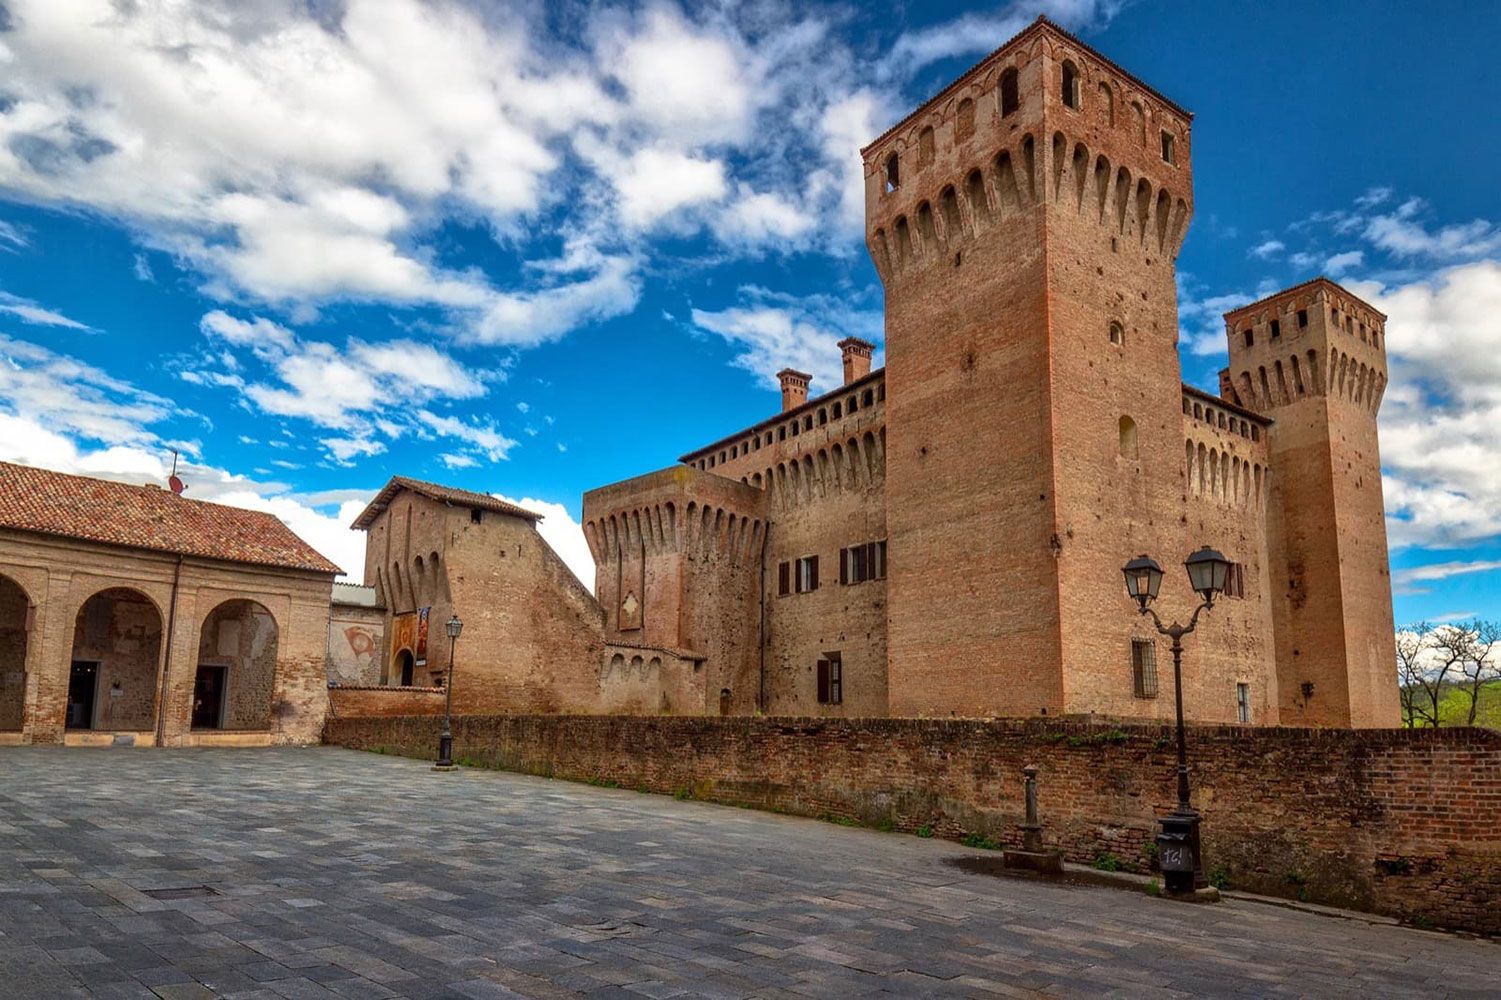 Modena Castle of Vignola